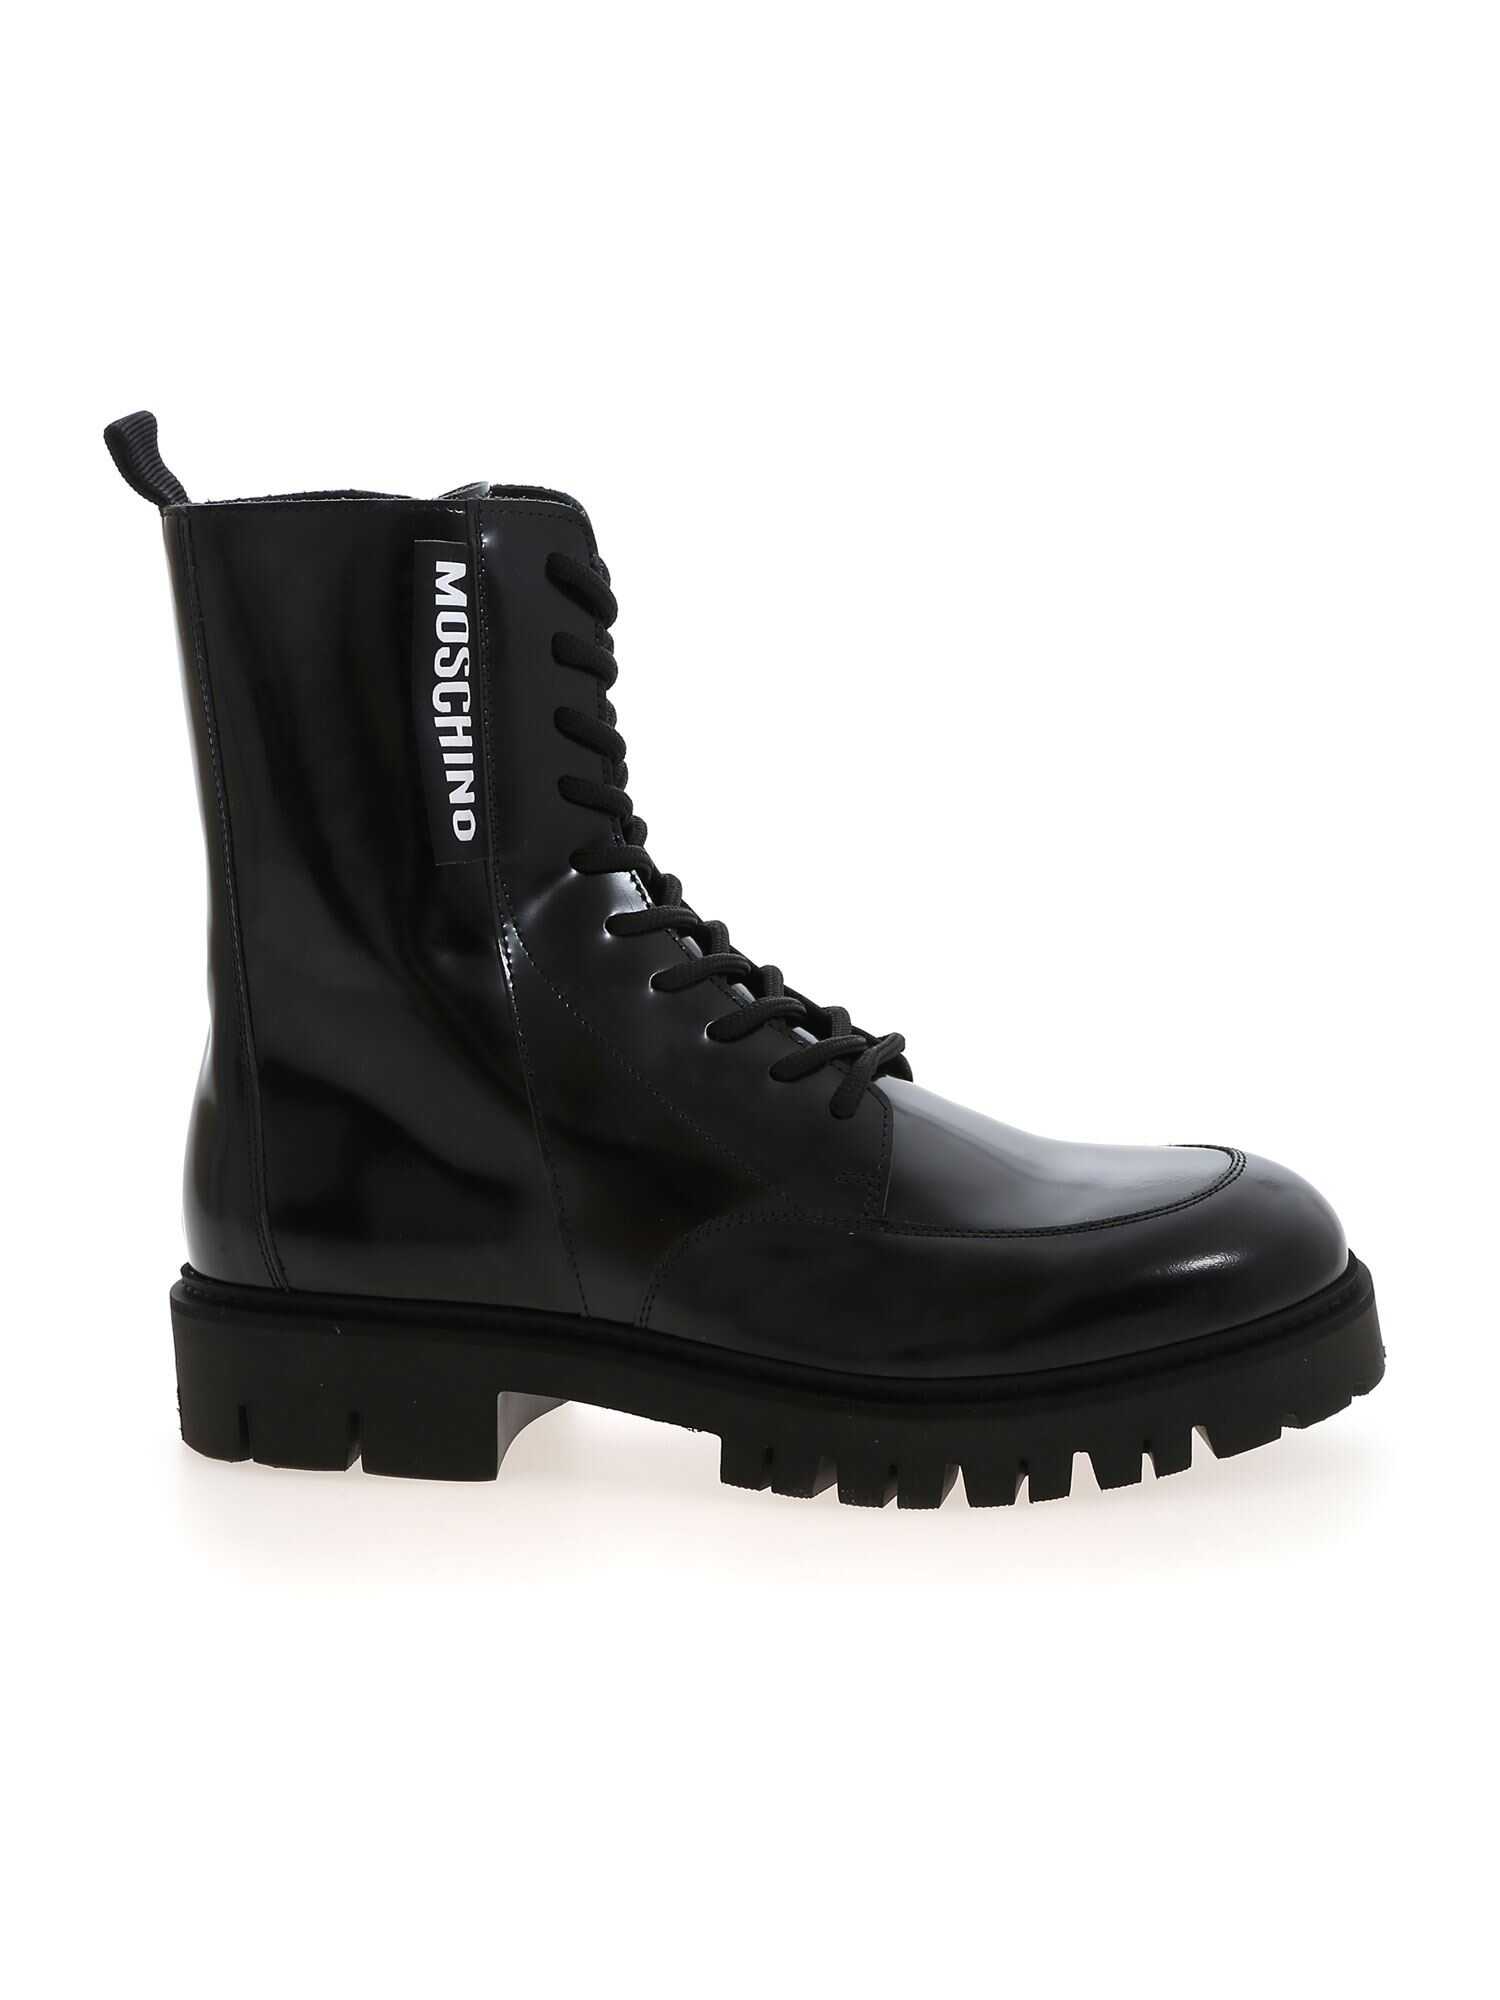 Moschino Label Boots NERO